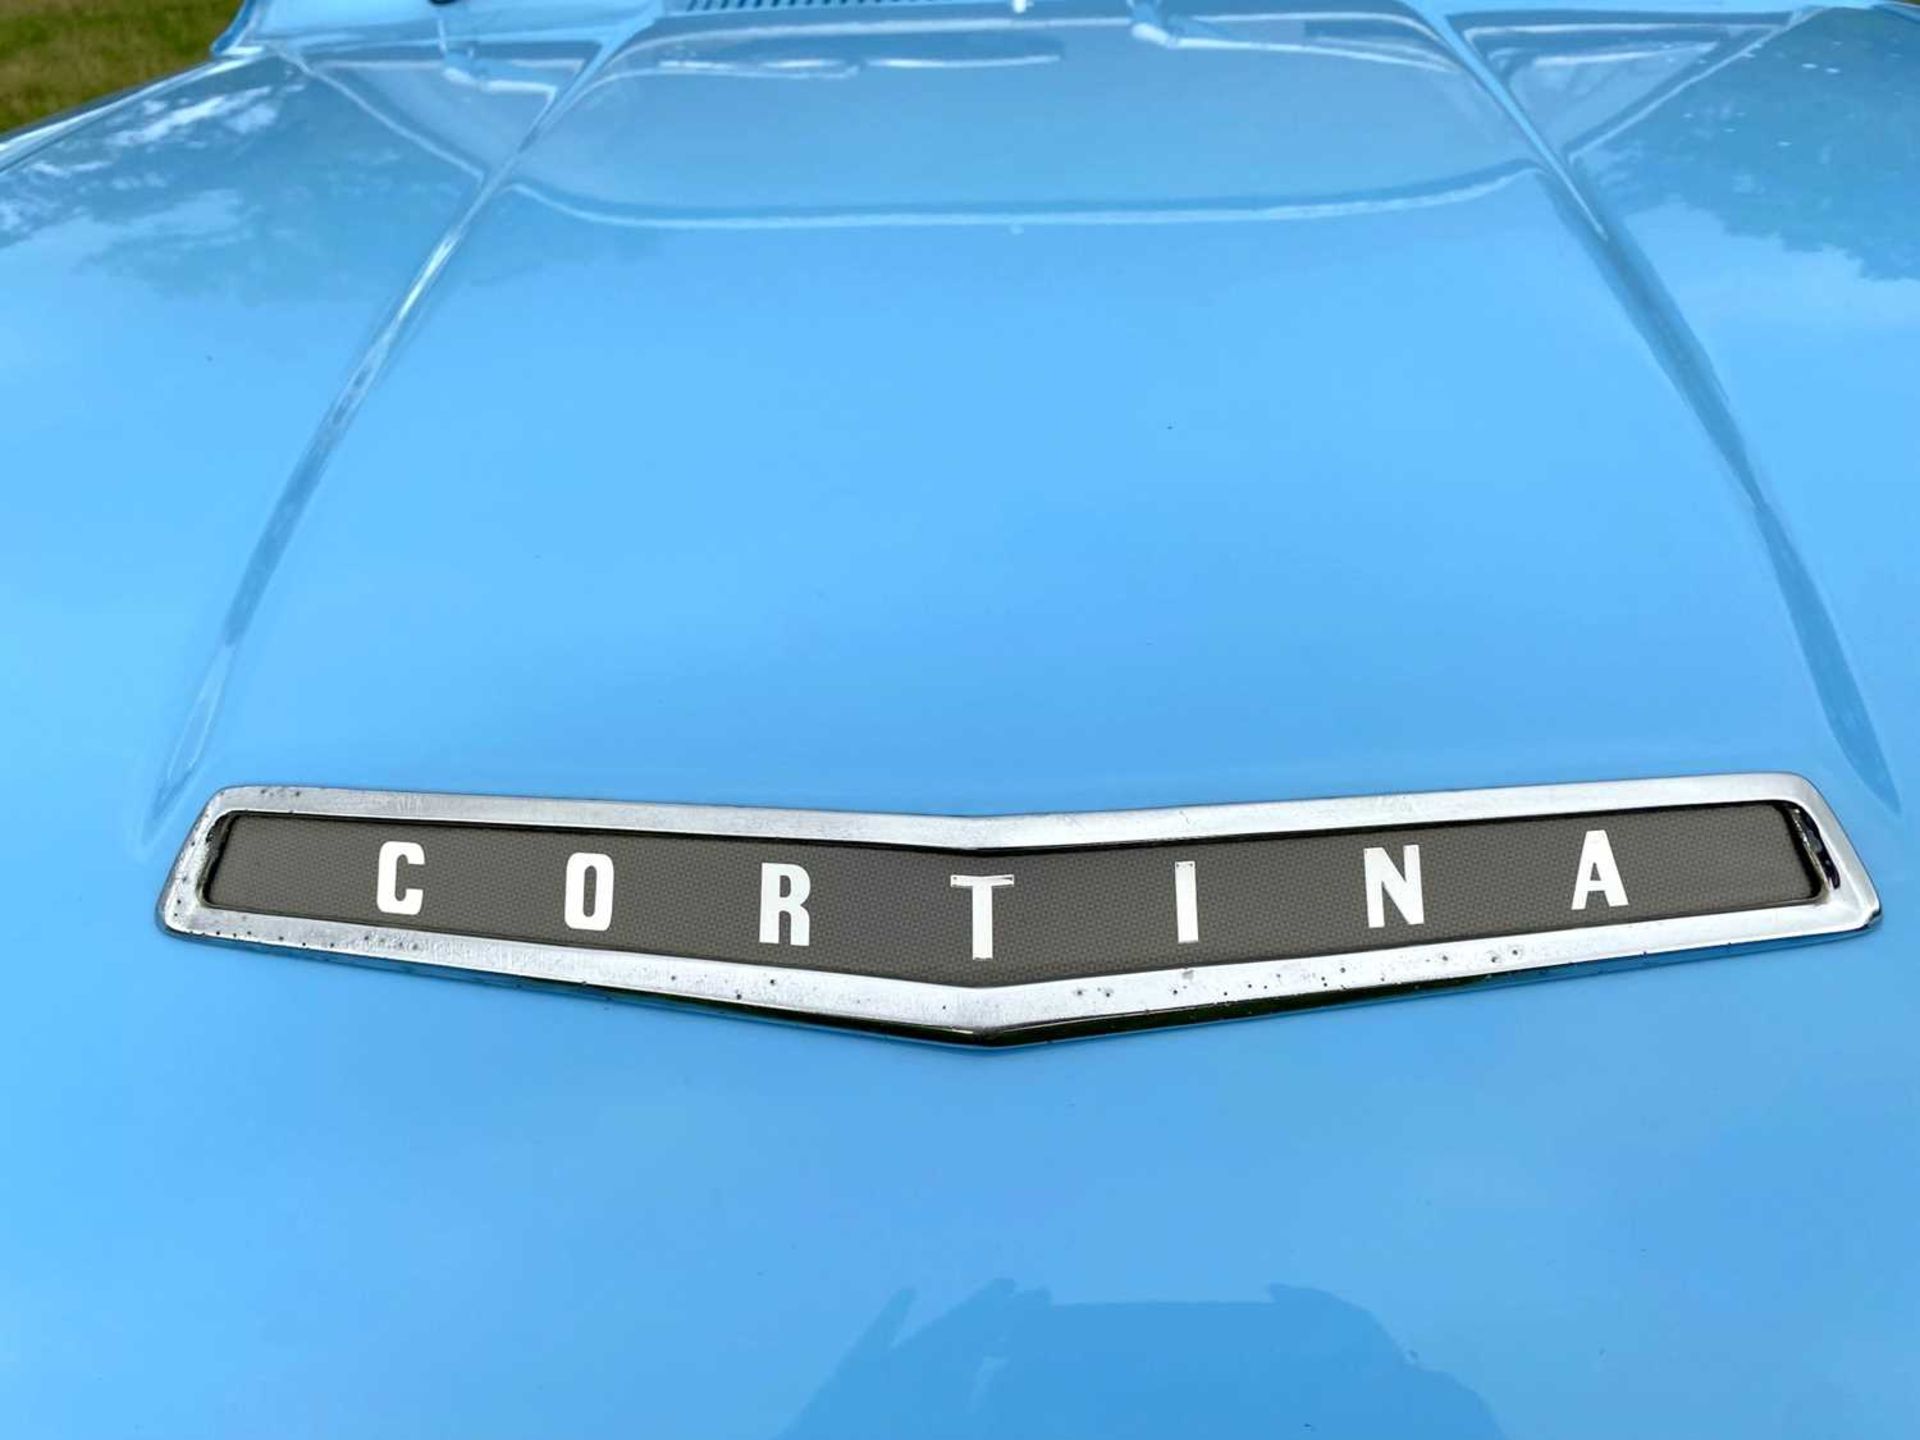 1966 Ford Cortina 1500 Super - Image 56 of 82